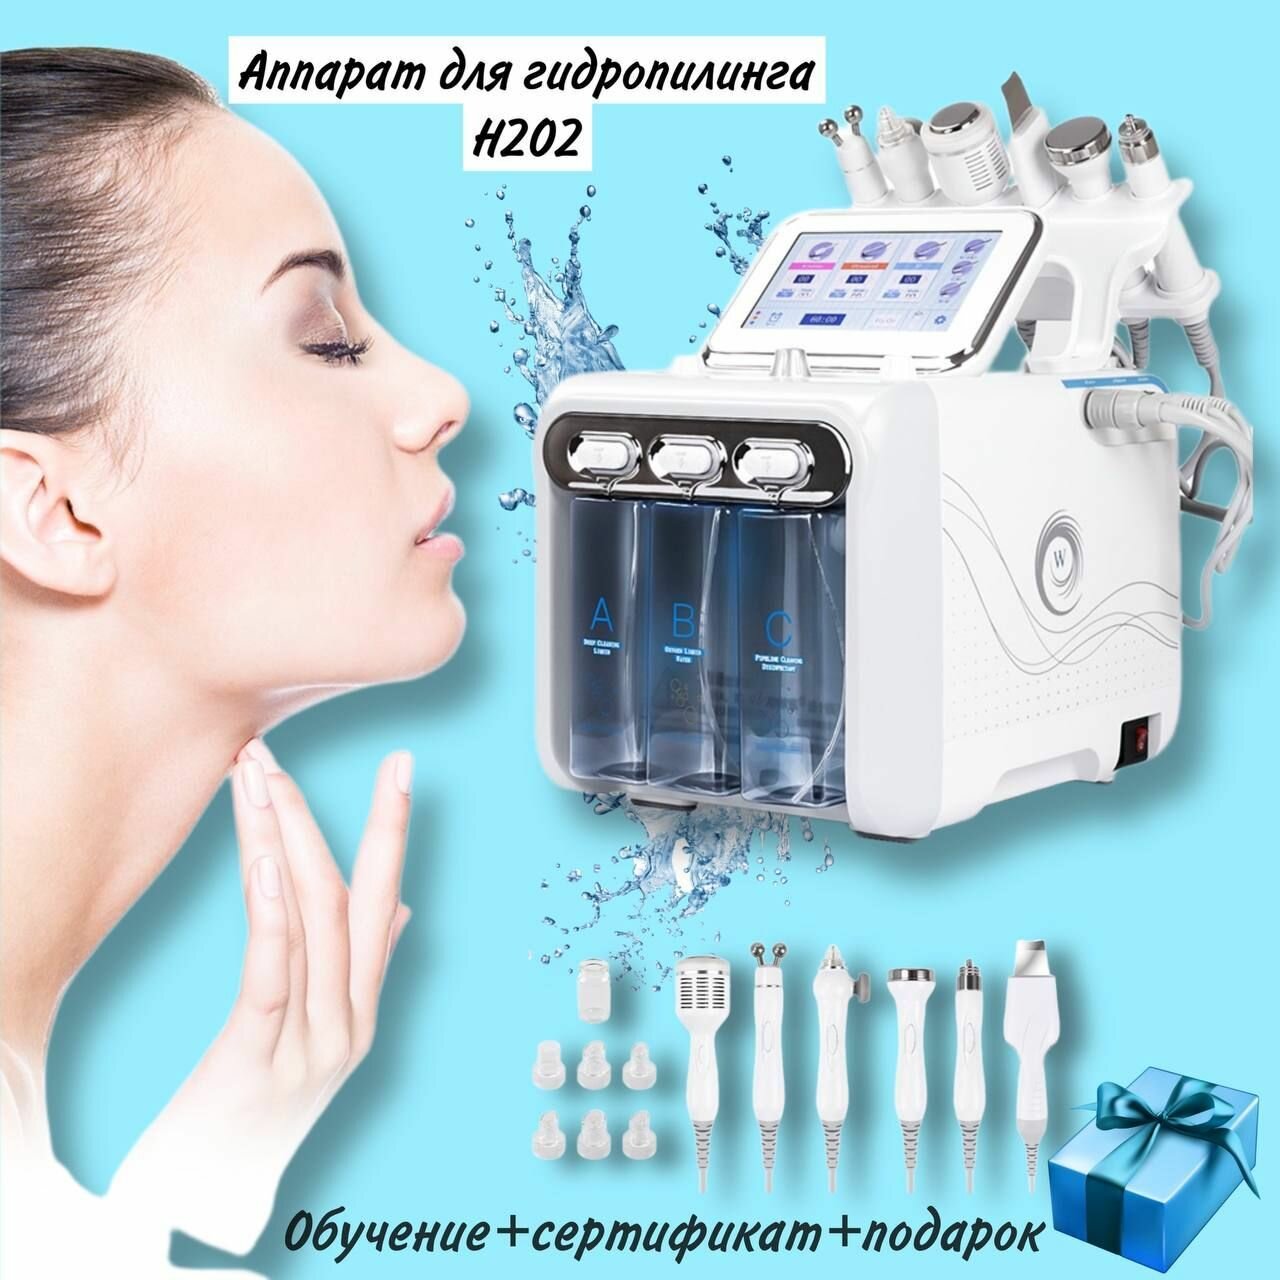 Косметологический аппарат для гидропилинга/аквапилинга H202 6в1